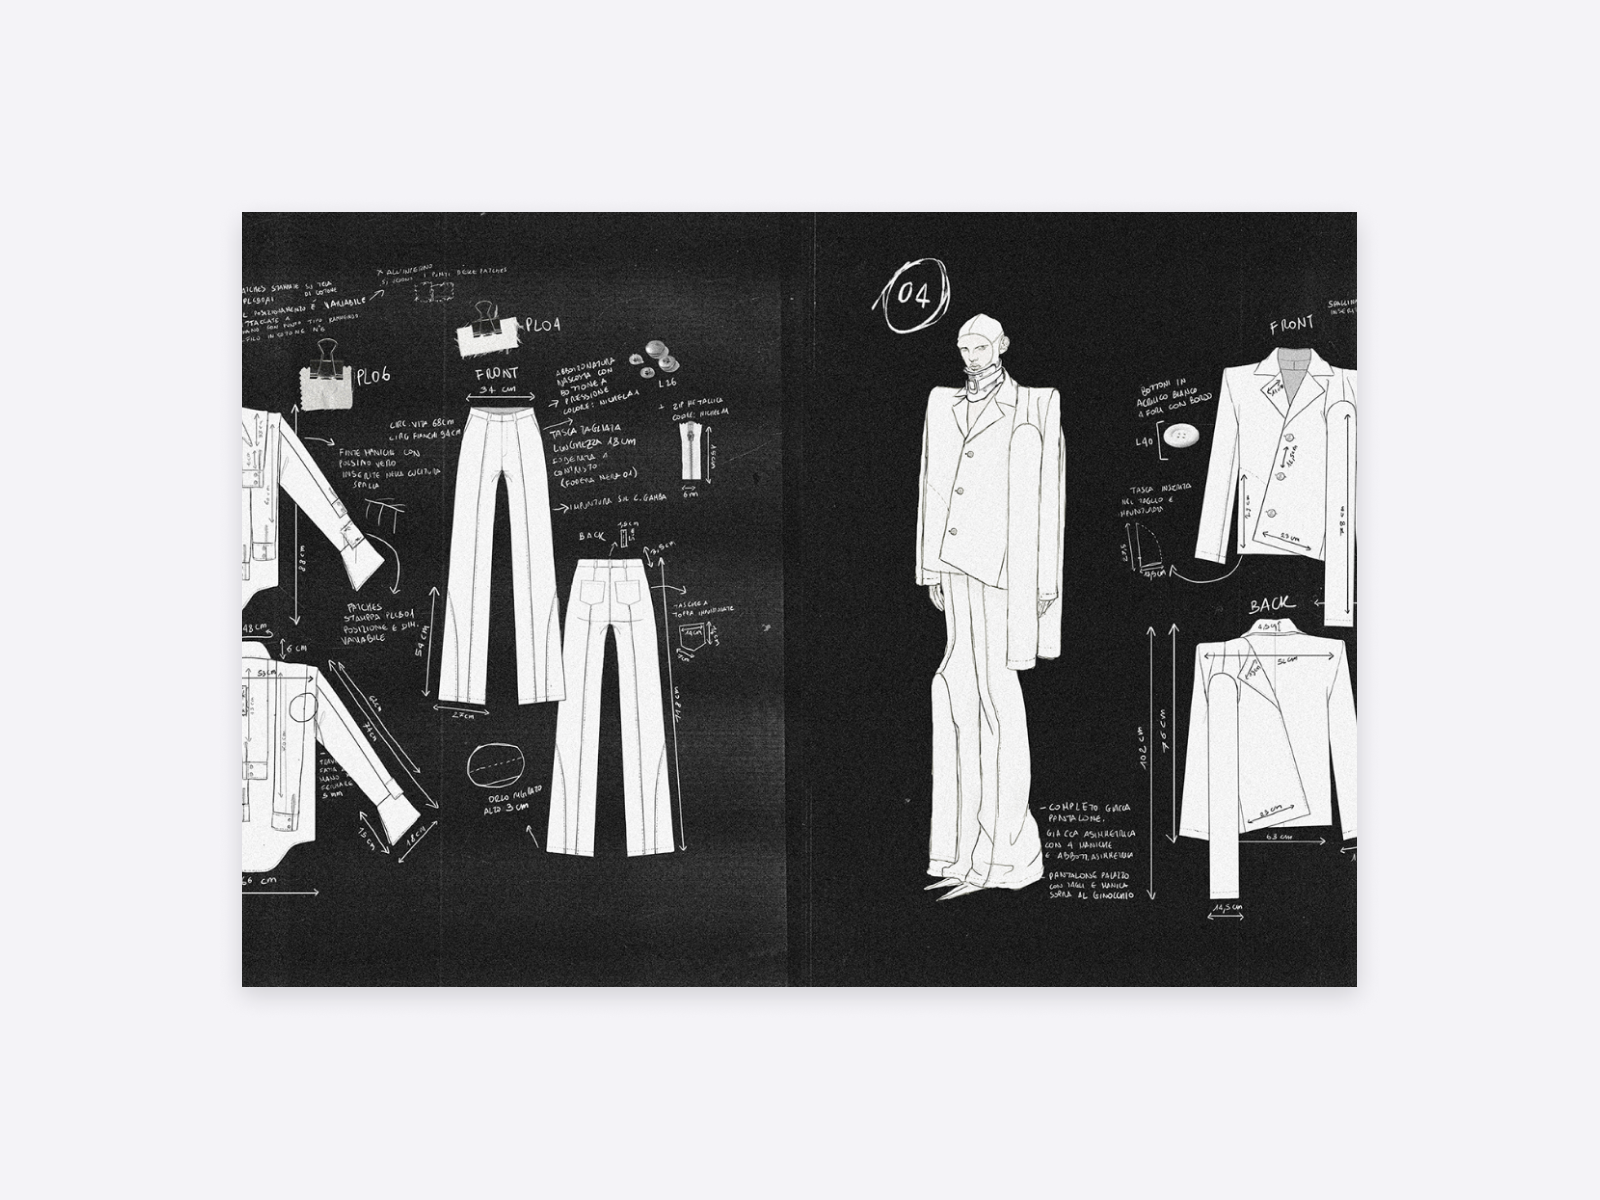 Paolo Belleri's fashion portfolio sketches